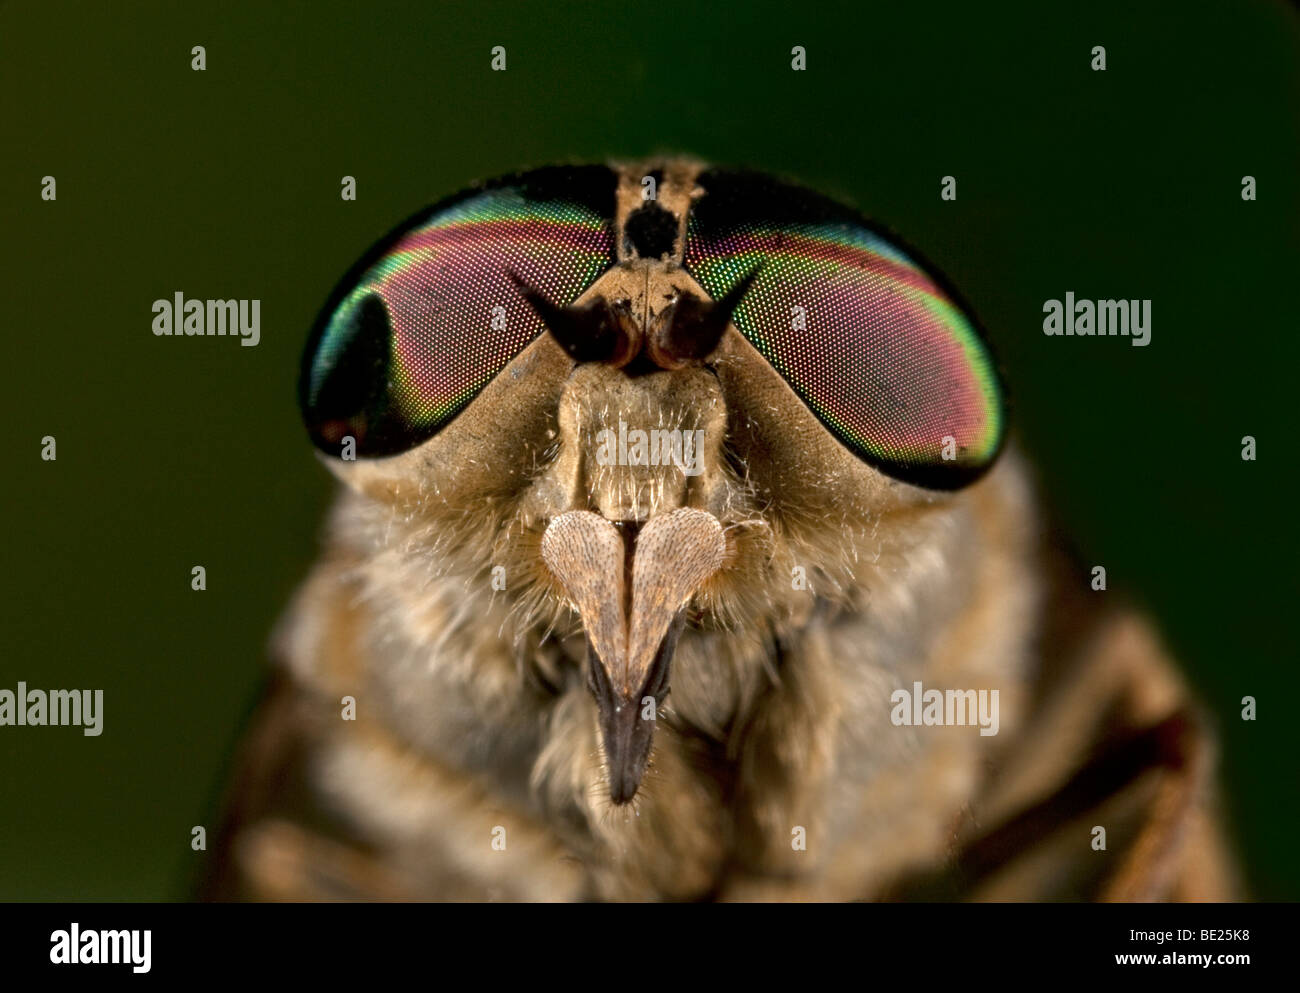 Horse Fly Tabanus bromius macro close up showing large compound eye Stock Photo